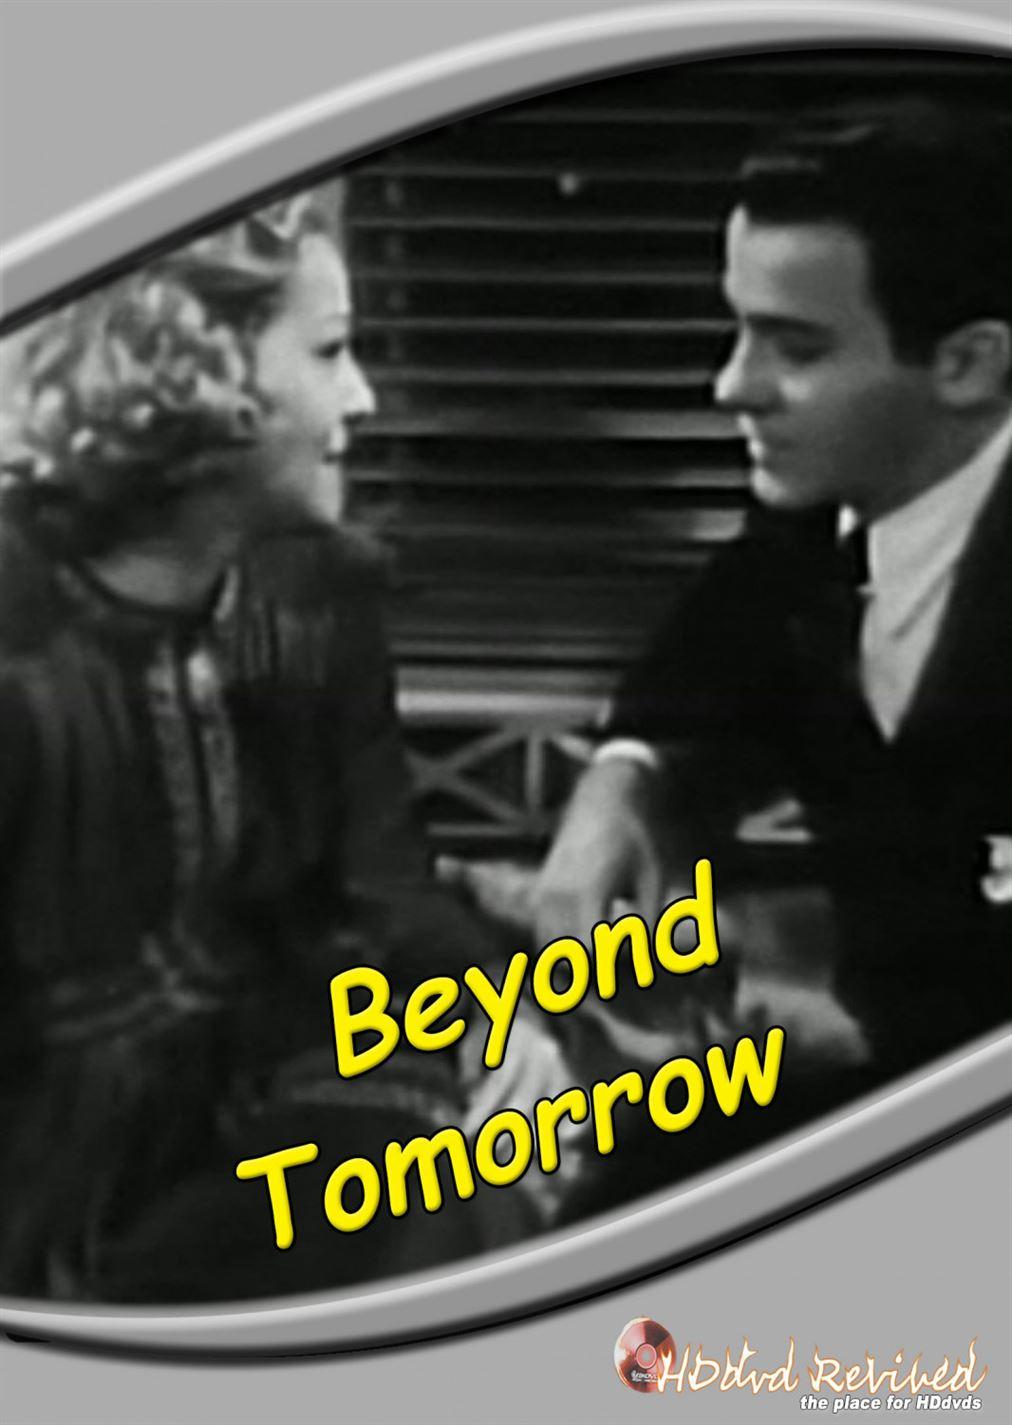 Beyond Tomorrow (1940) Standard DVD (HDDVD-Revived) UK Seller